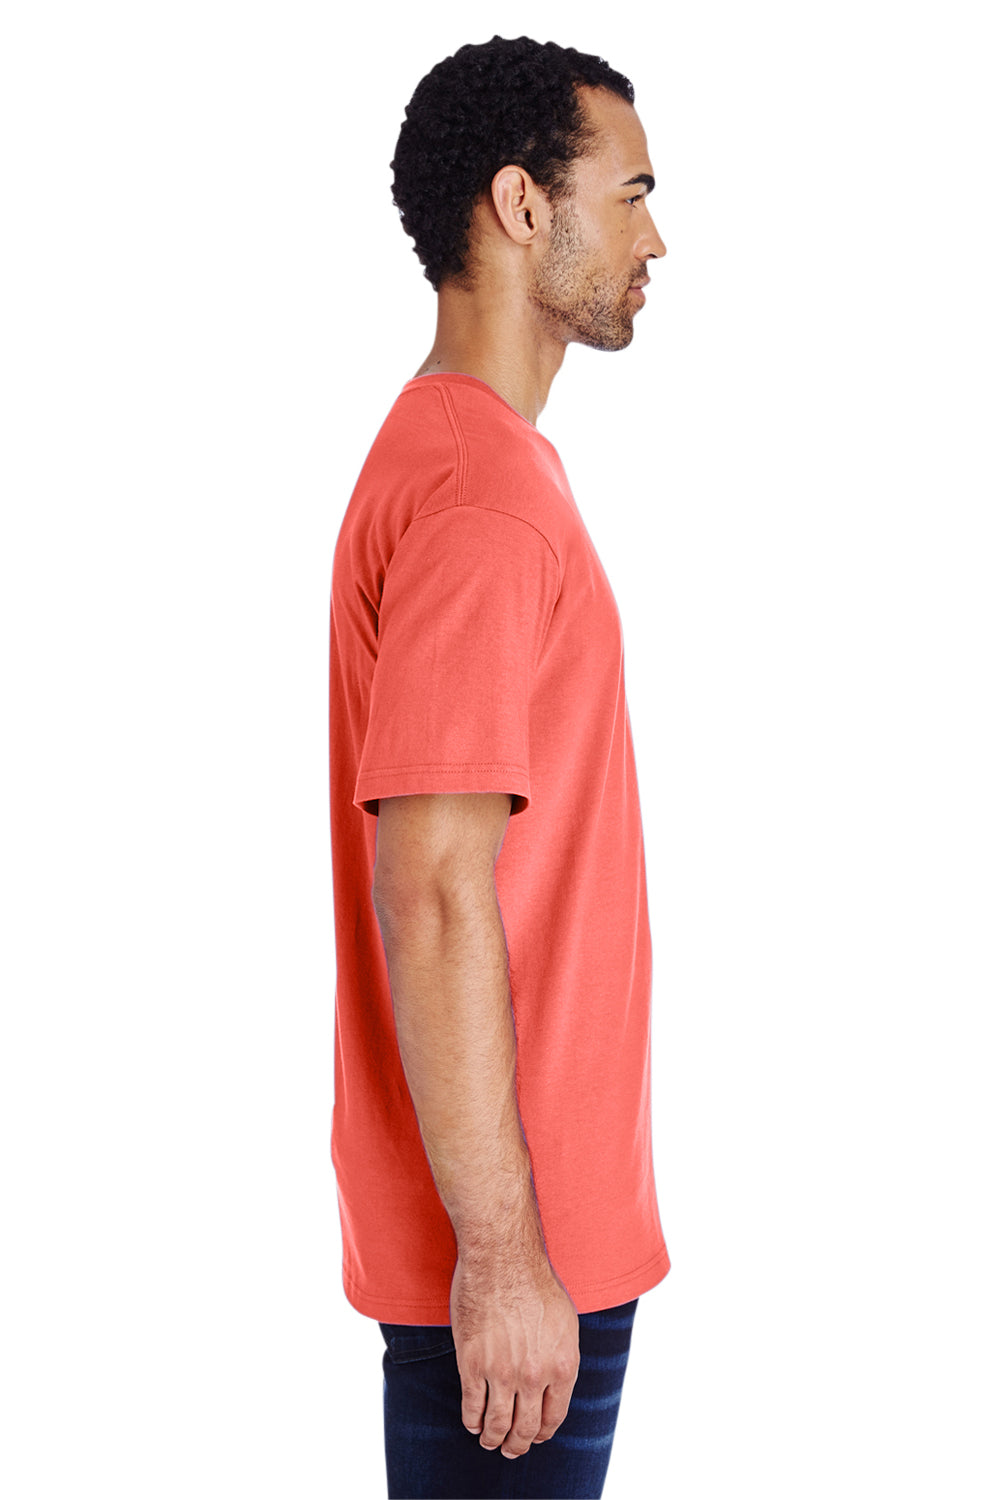 Gildan H000 Mens Hammer Short Sleeve Crewneck T-Shirt Coral Silk Pink Side